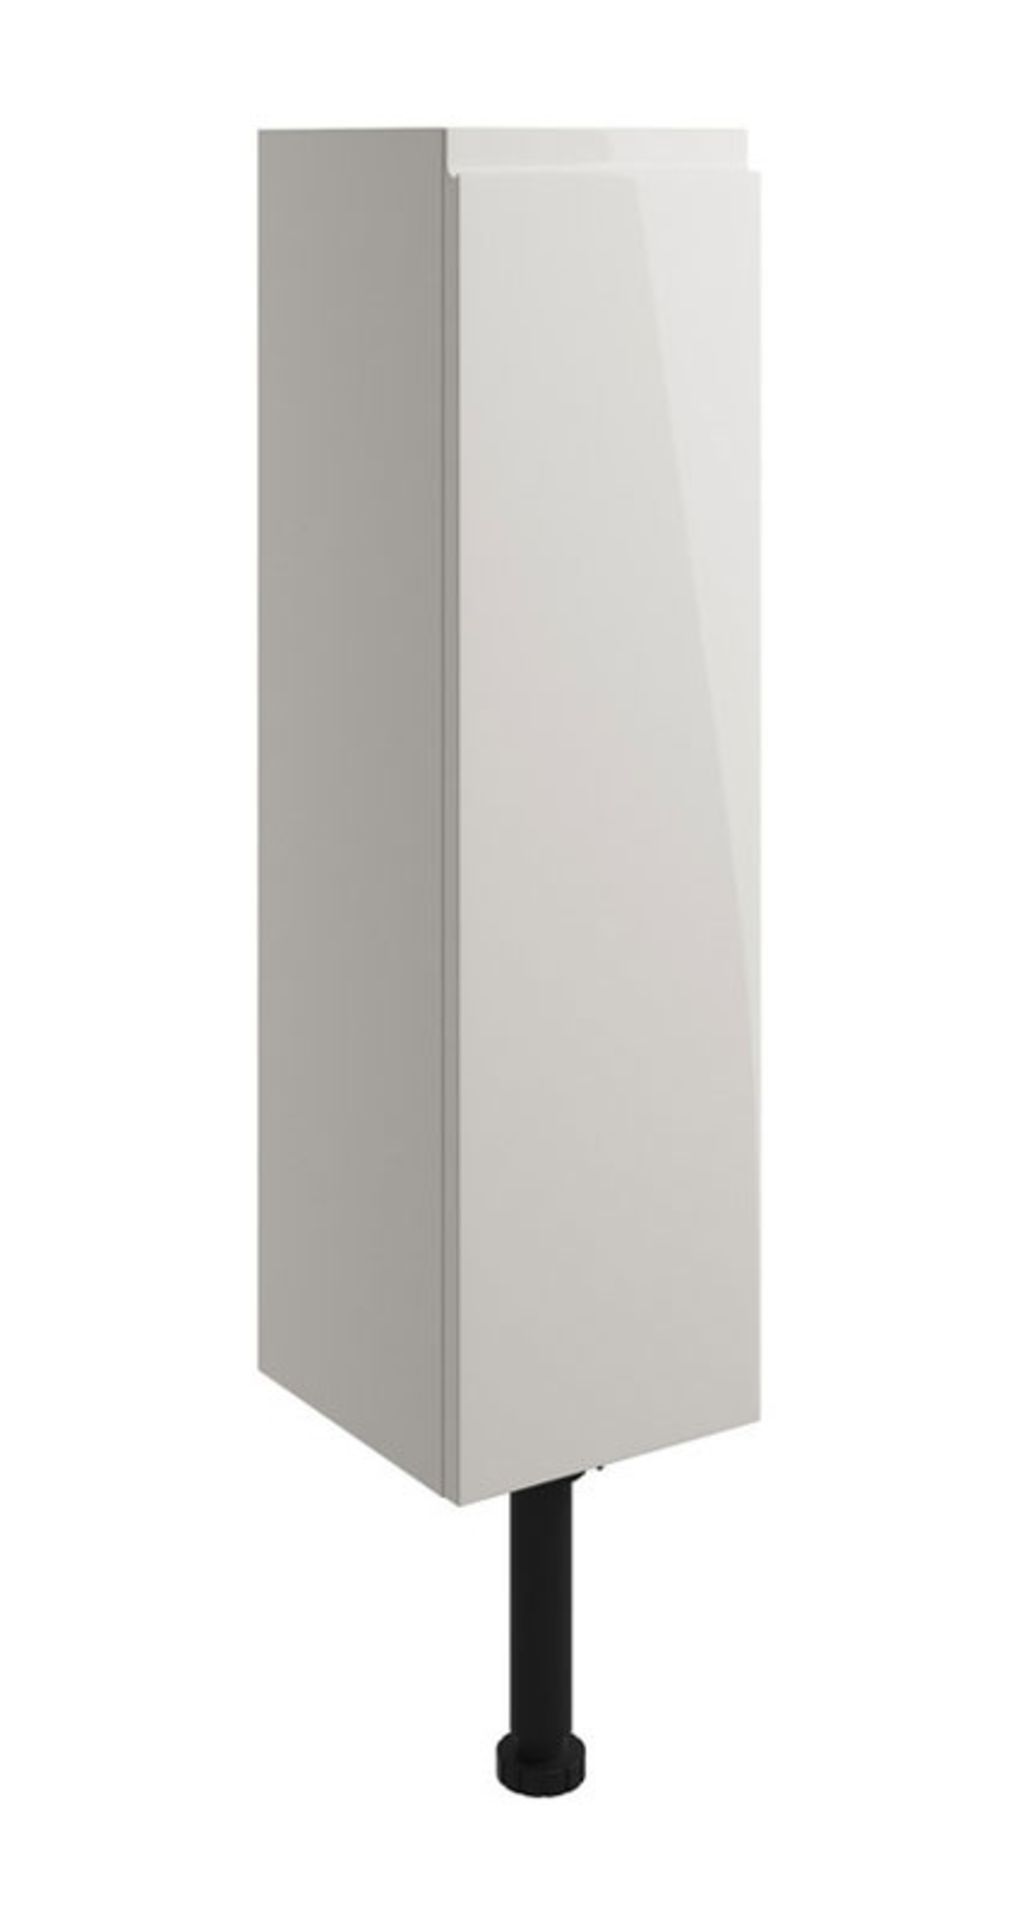 NEW (C215) Valesso Light Grey Gloss 200mm Slim Base Unit. 720mm x 200mm x 218mm (HxWxD). Floor ... - Image 2 of 2